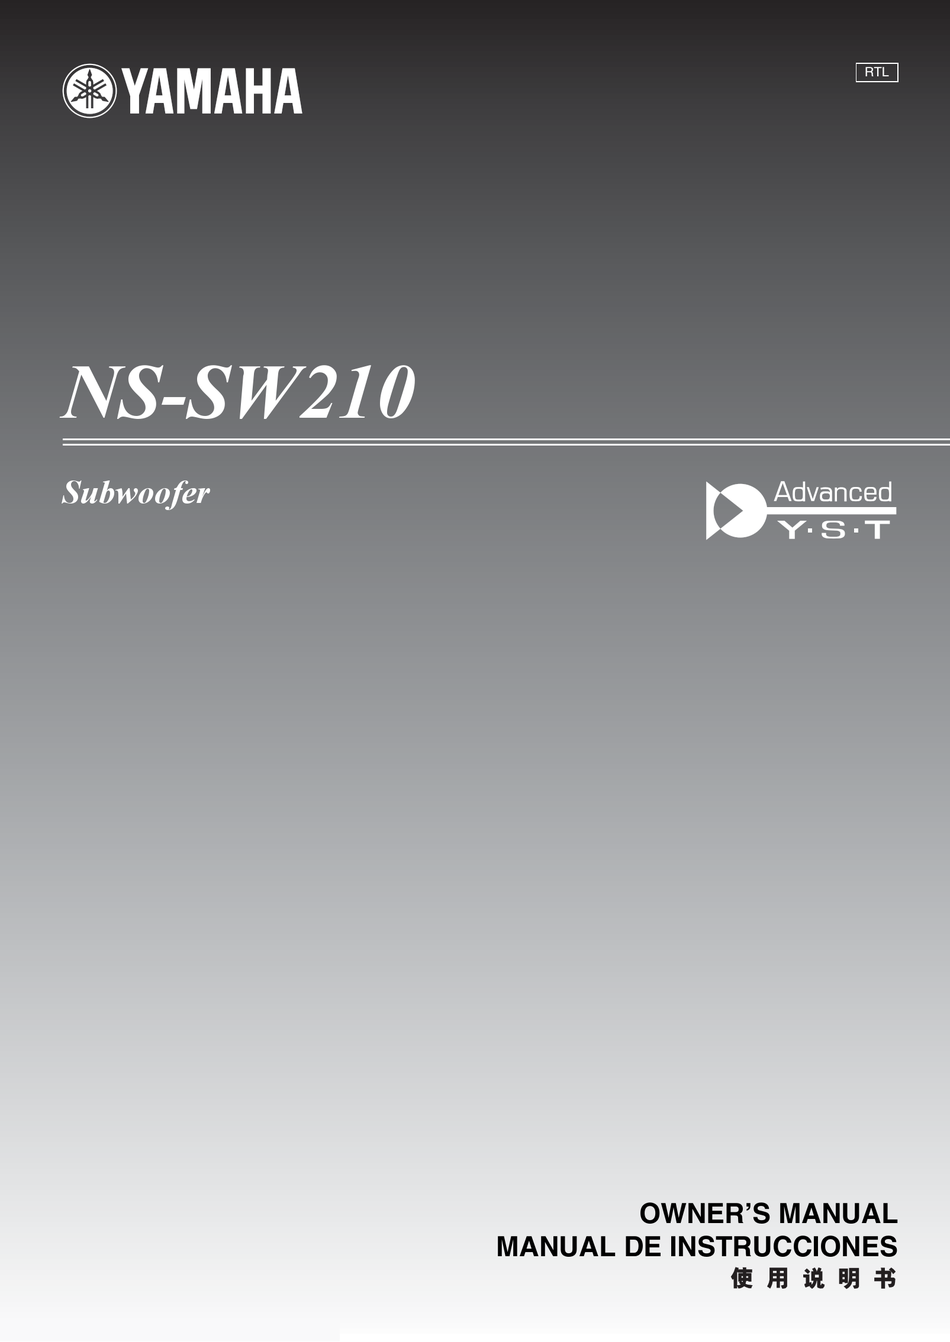 YAMAHA NS-SW210 OWNER'S MANUAL Pdf Download | ManualsLib